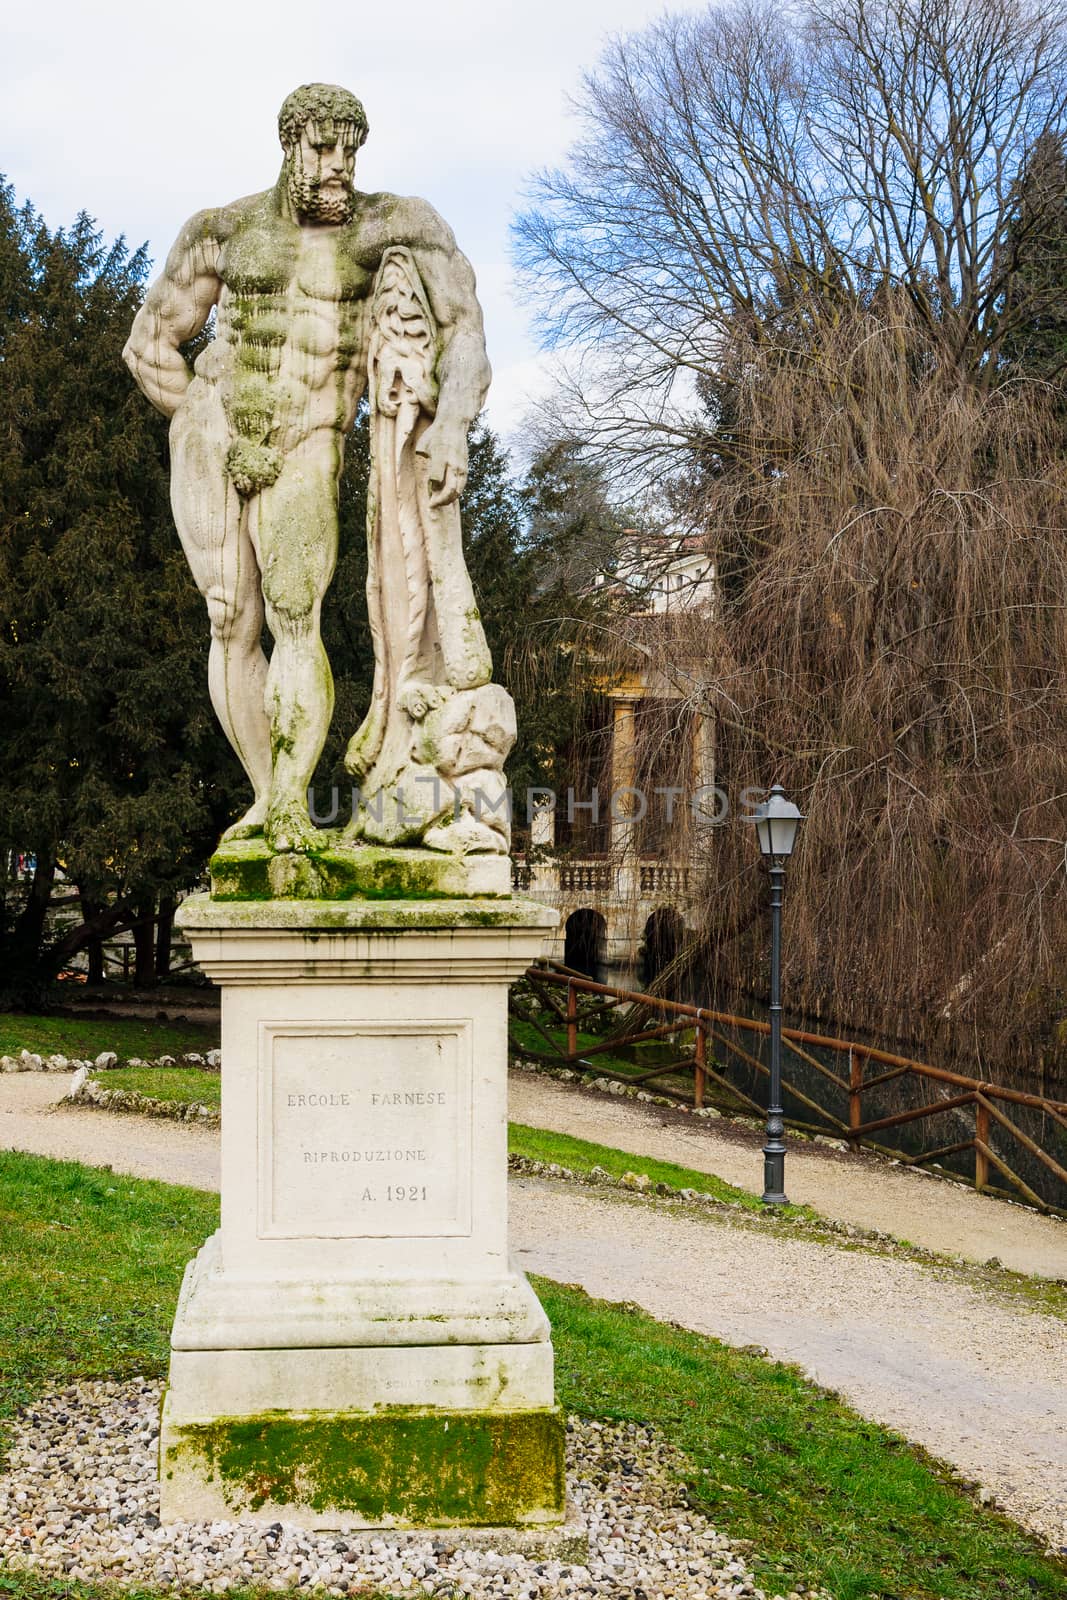 A statue in the Giardino Salvi garden, in Vicenza, Veneto, Italy